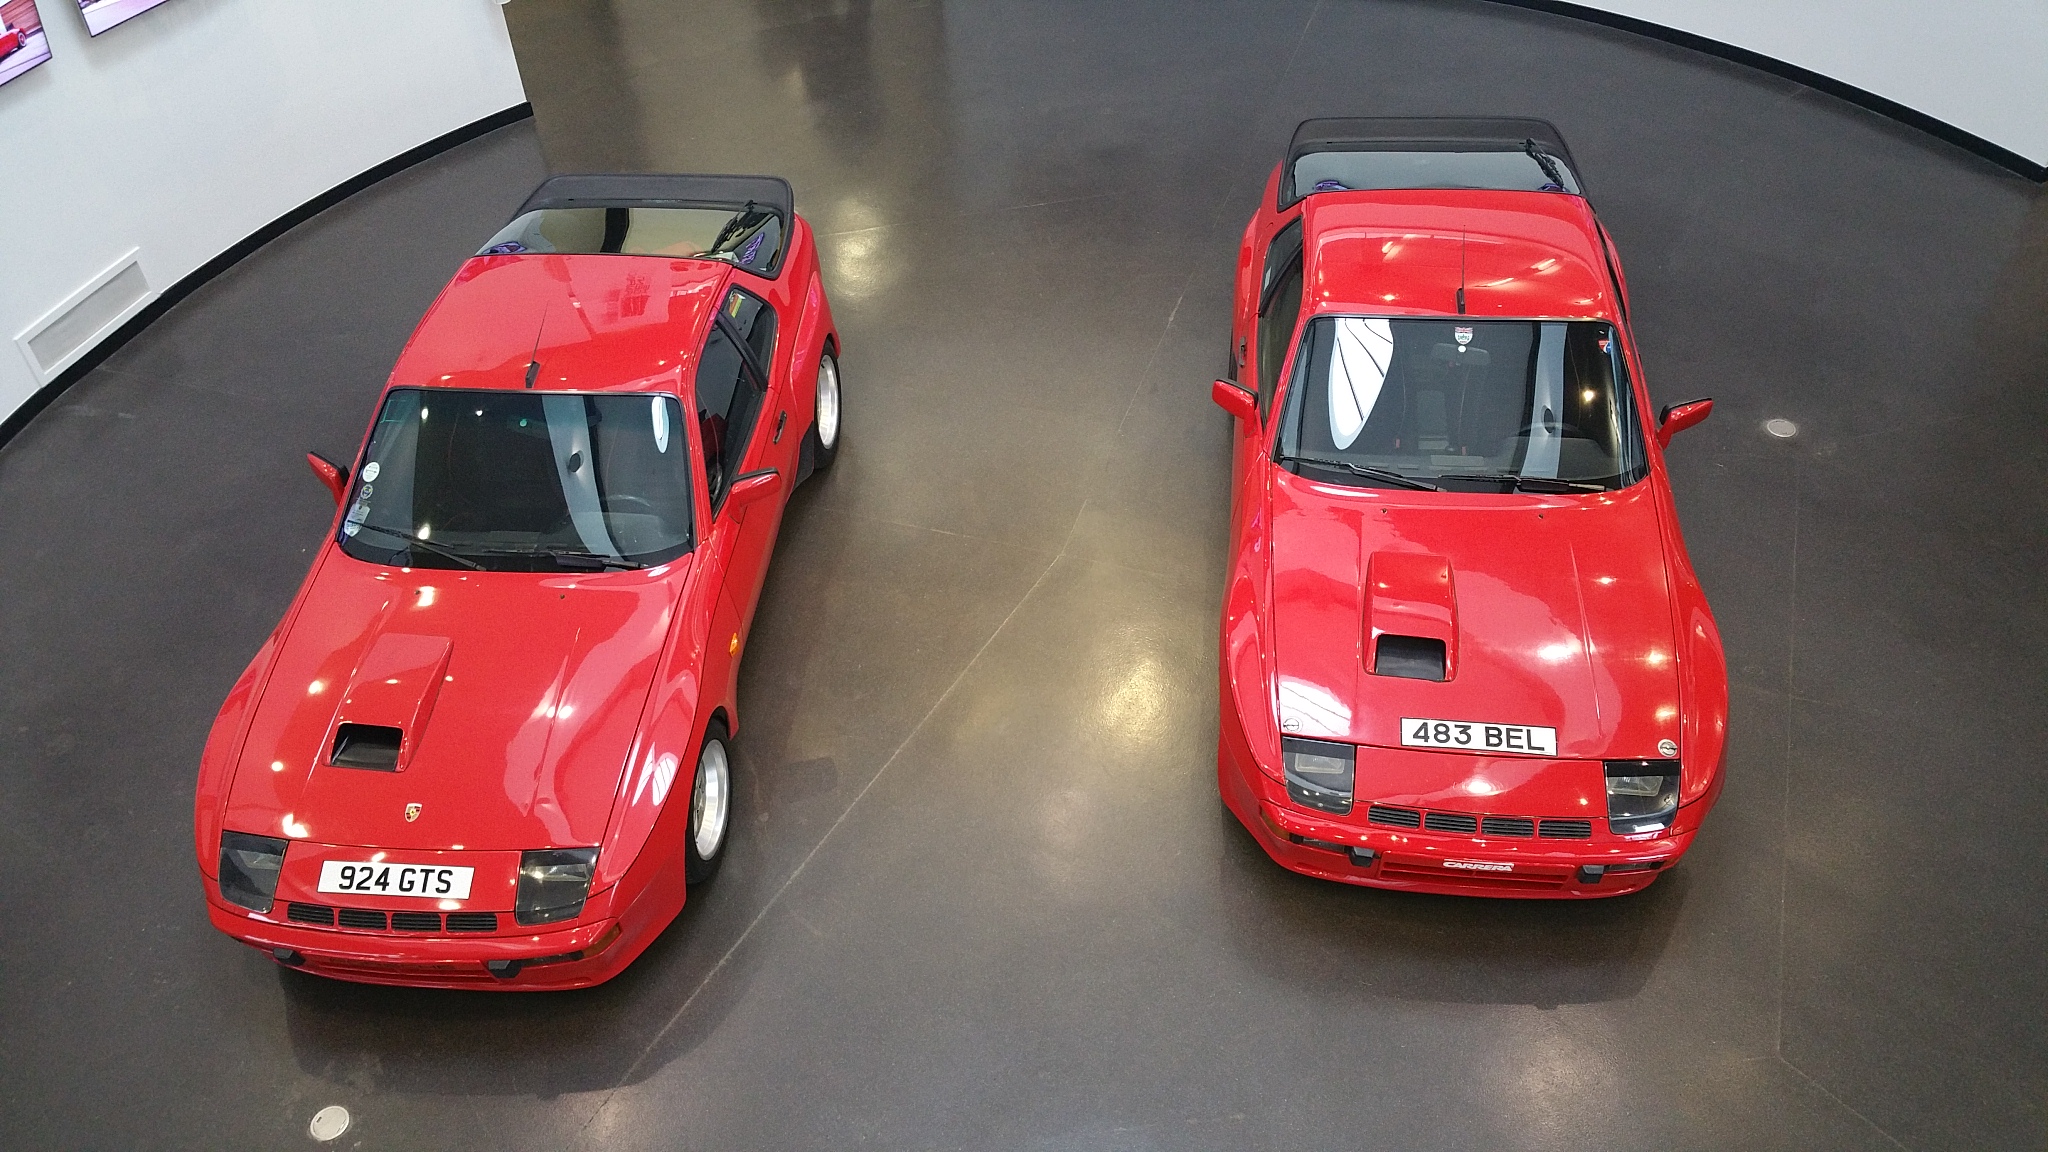 Two red Porsche 924 Carrera GTs